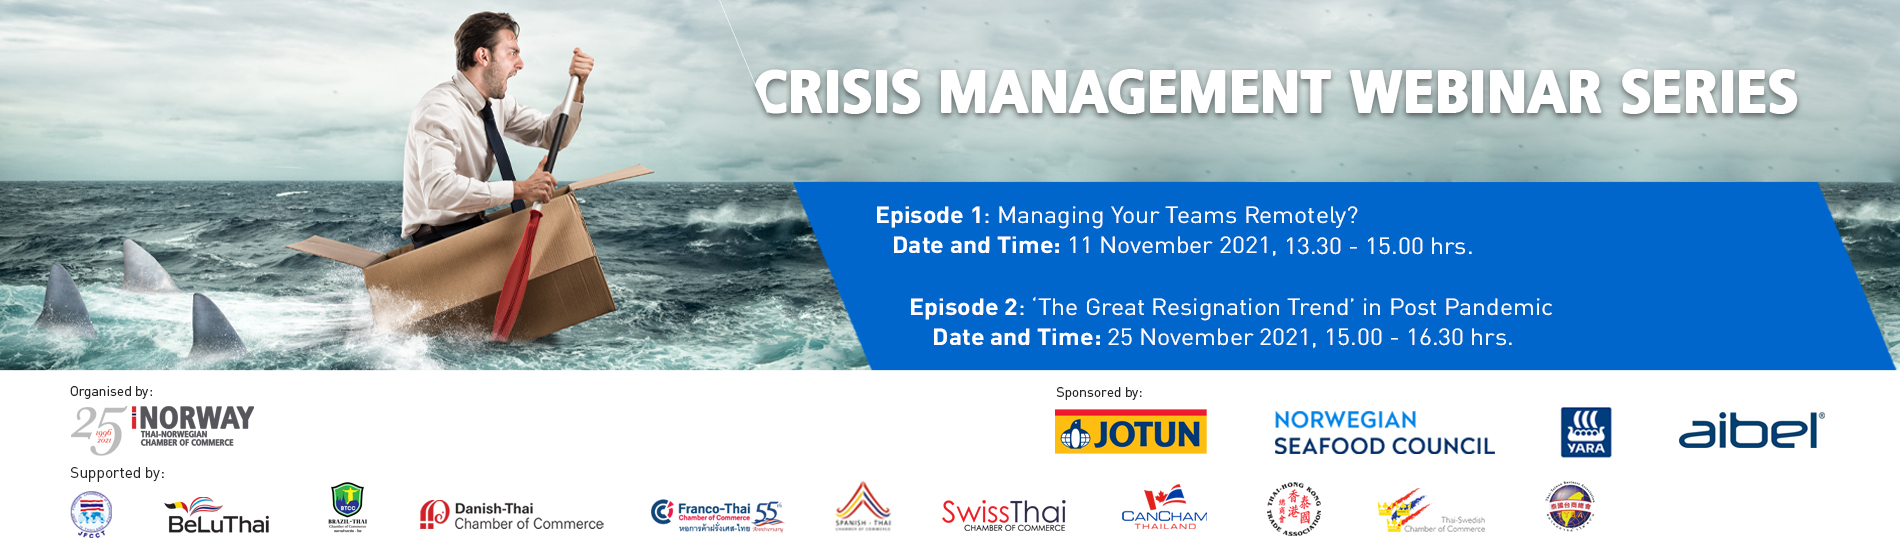 Series of Crisis Management Webinars 2021